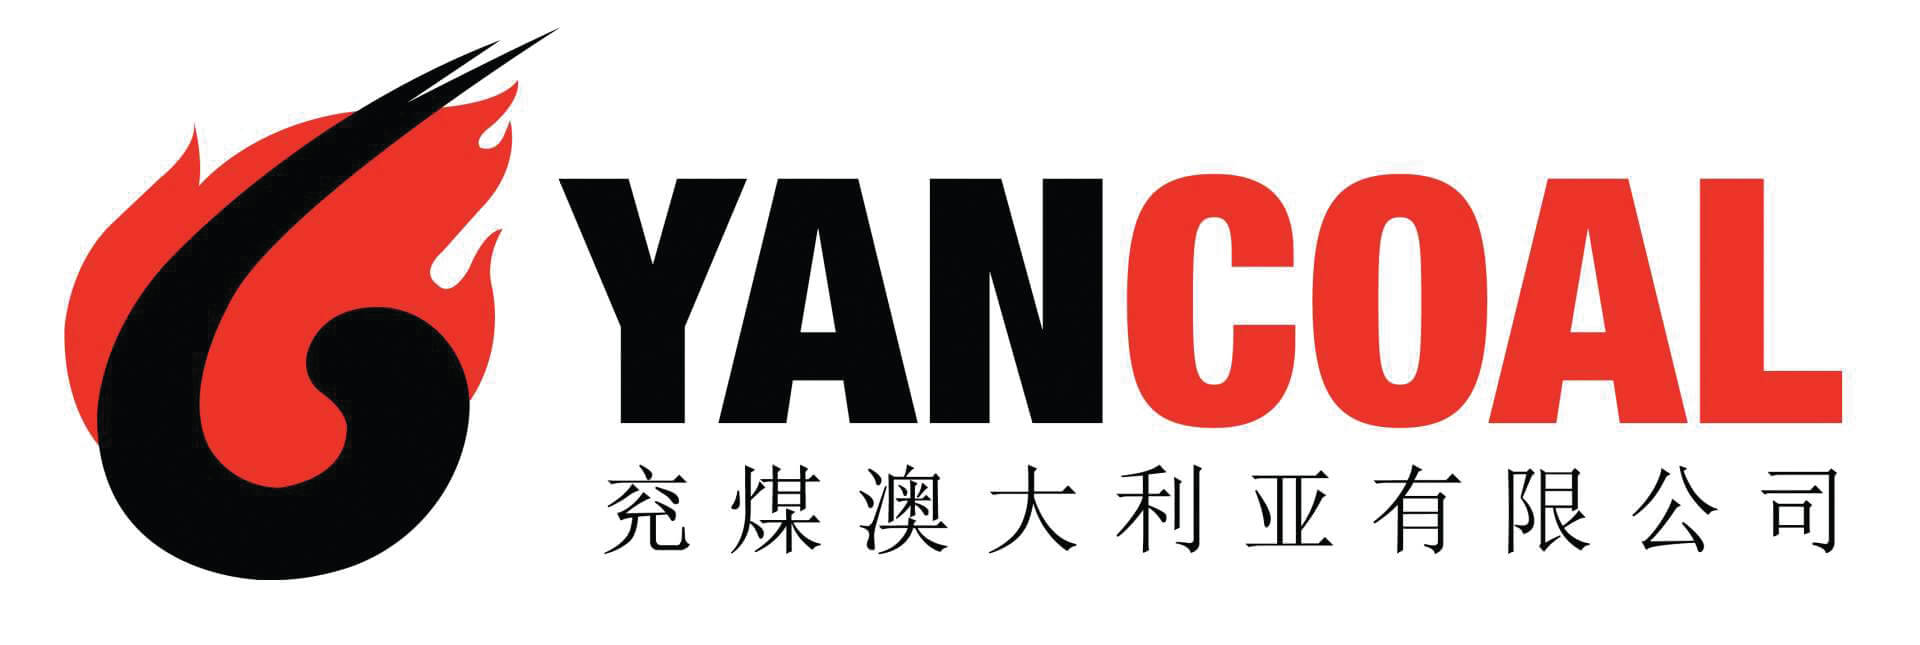 YanCoal-Corporate-300dpi-2